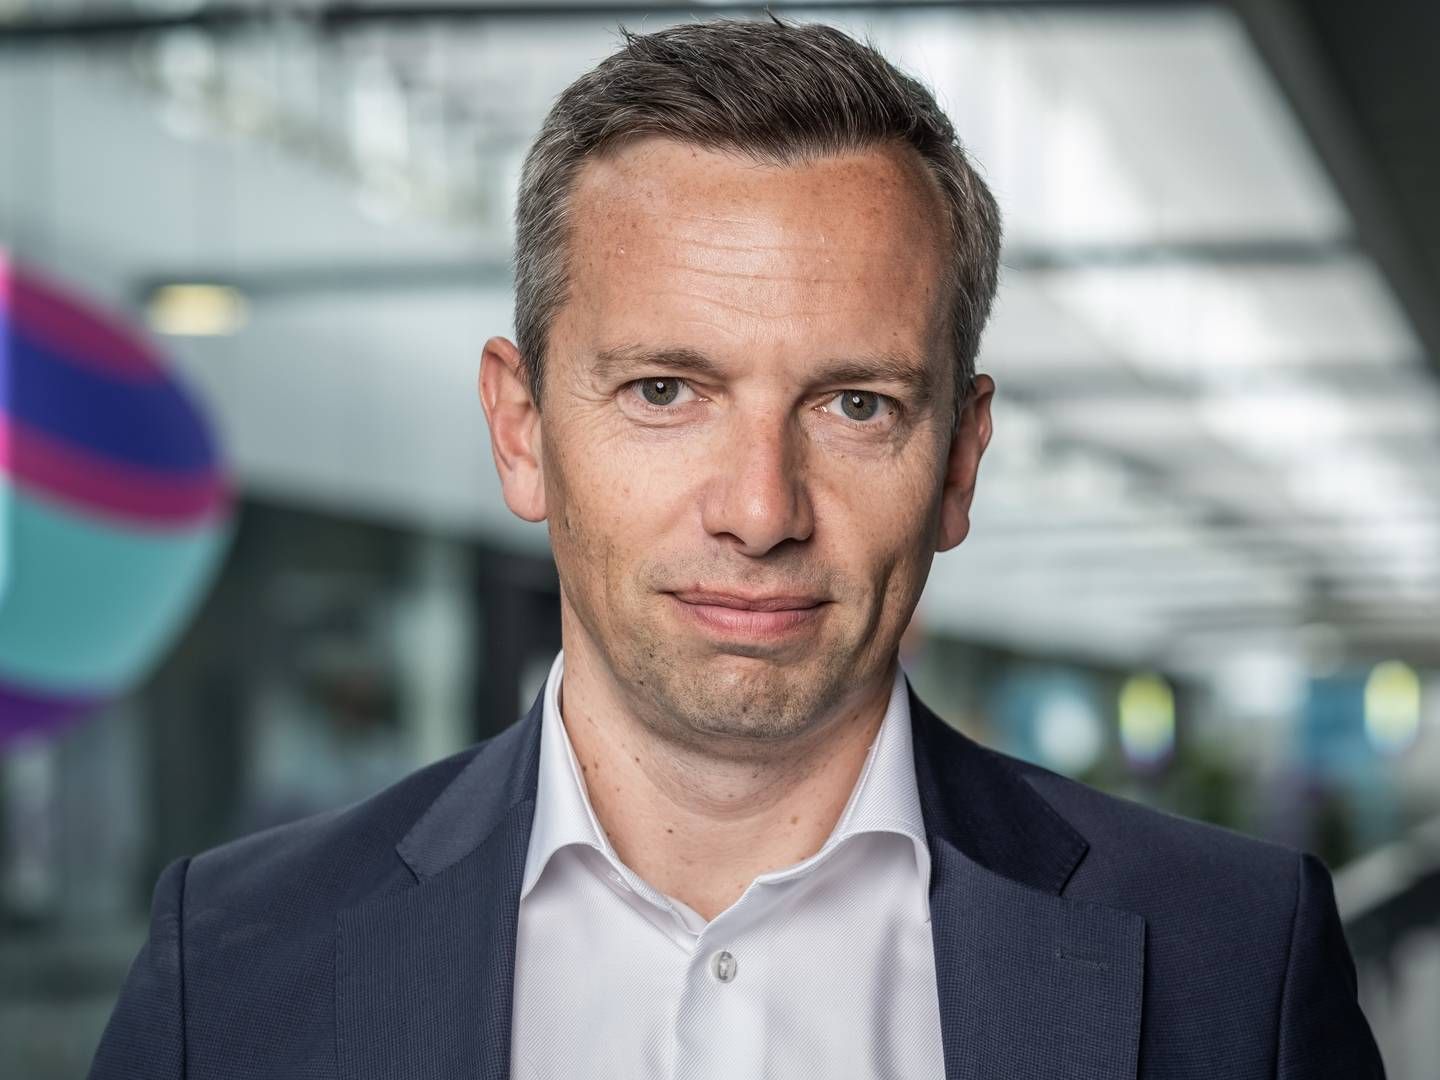 Adm. direktør i Telia Danmark, Thomas Kjærsgaard. | Foto: Telia/PR